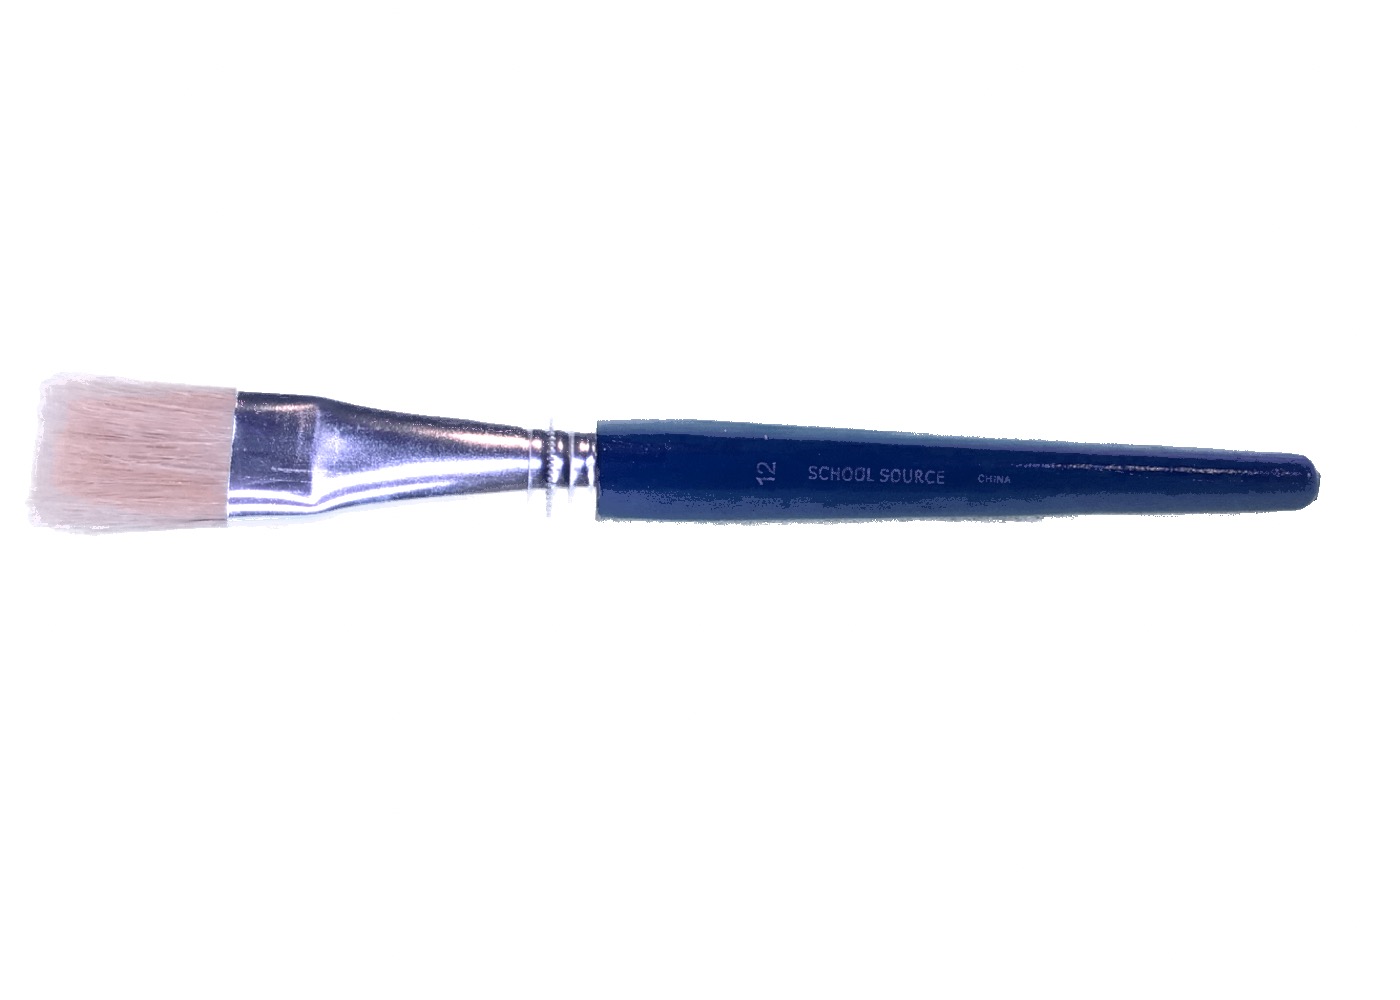 Short Blue Handled Bristle Flat Brush #12 - Each